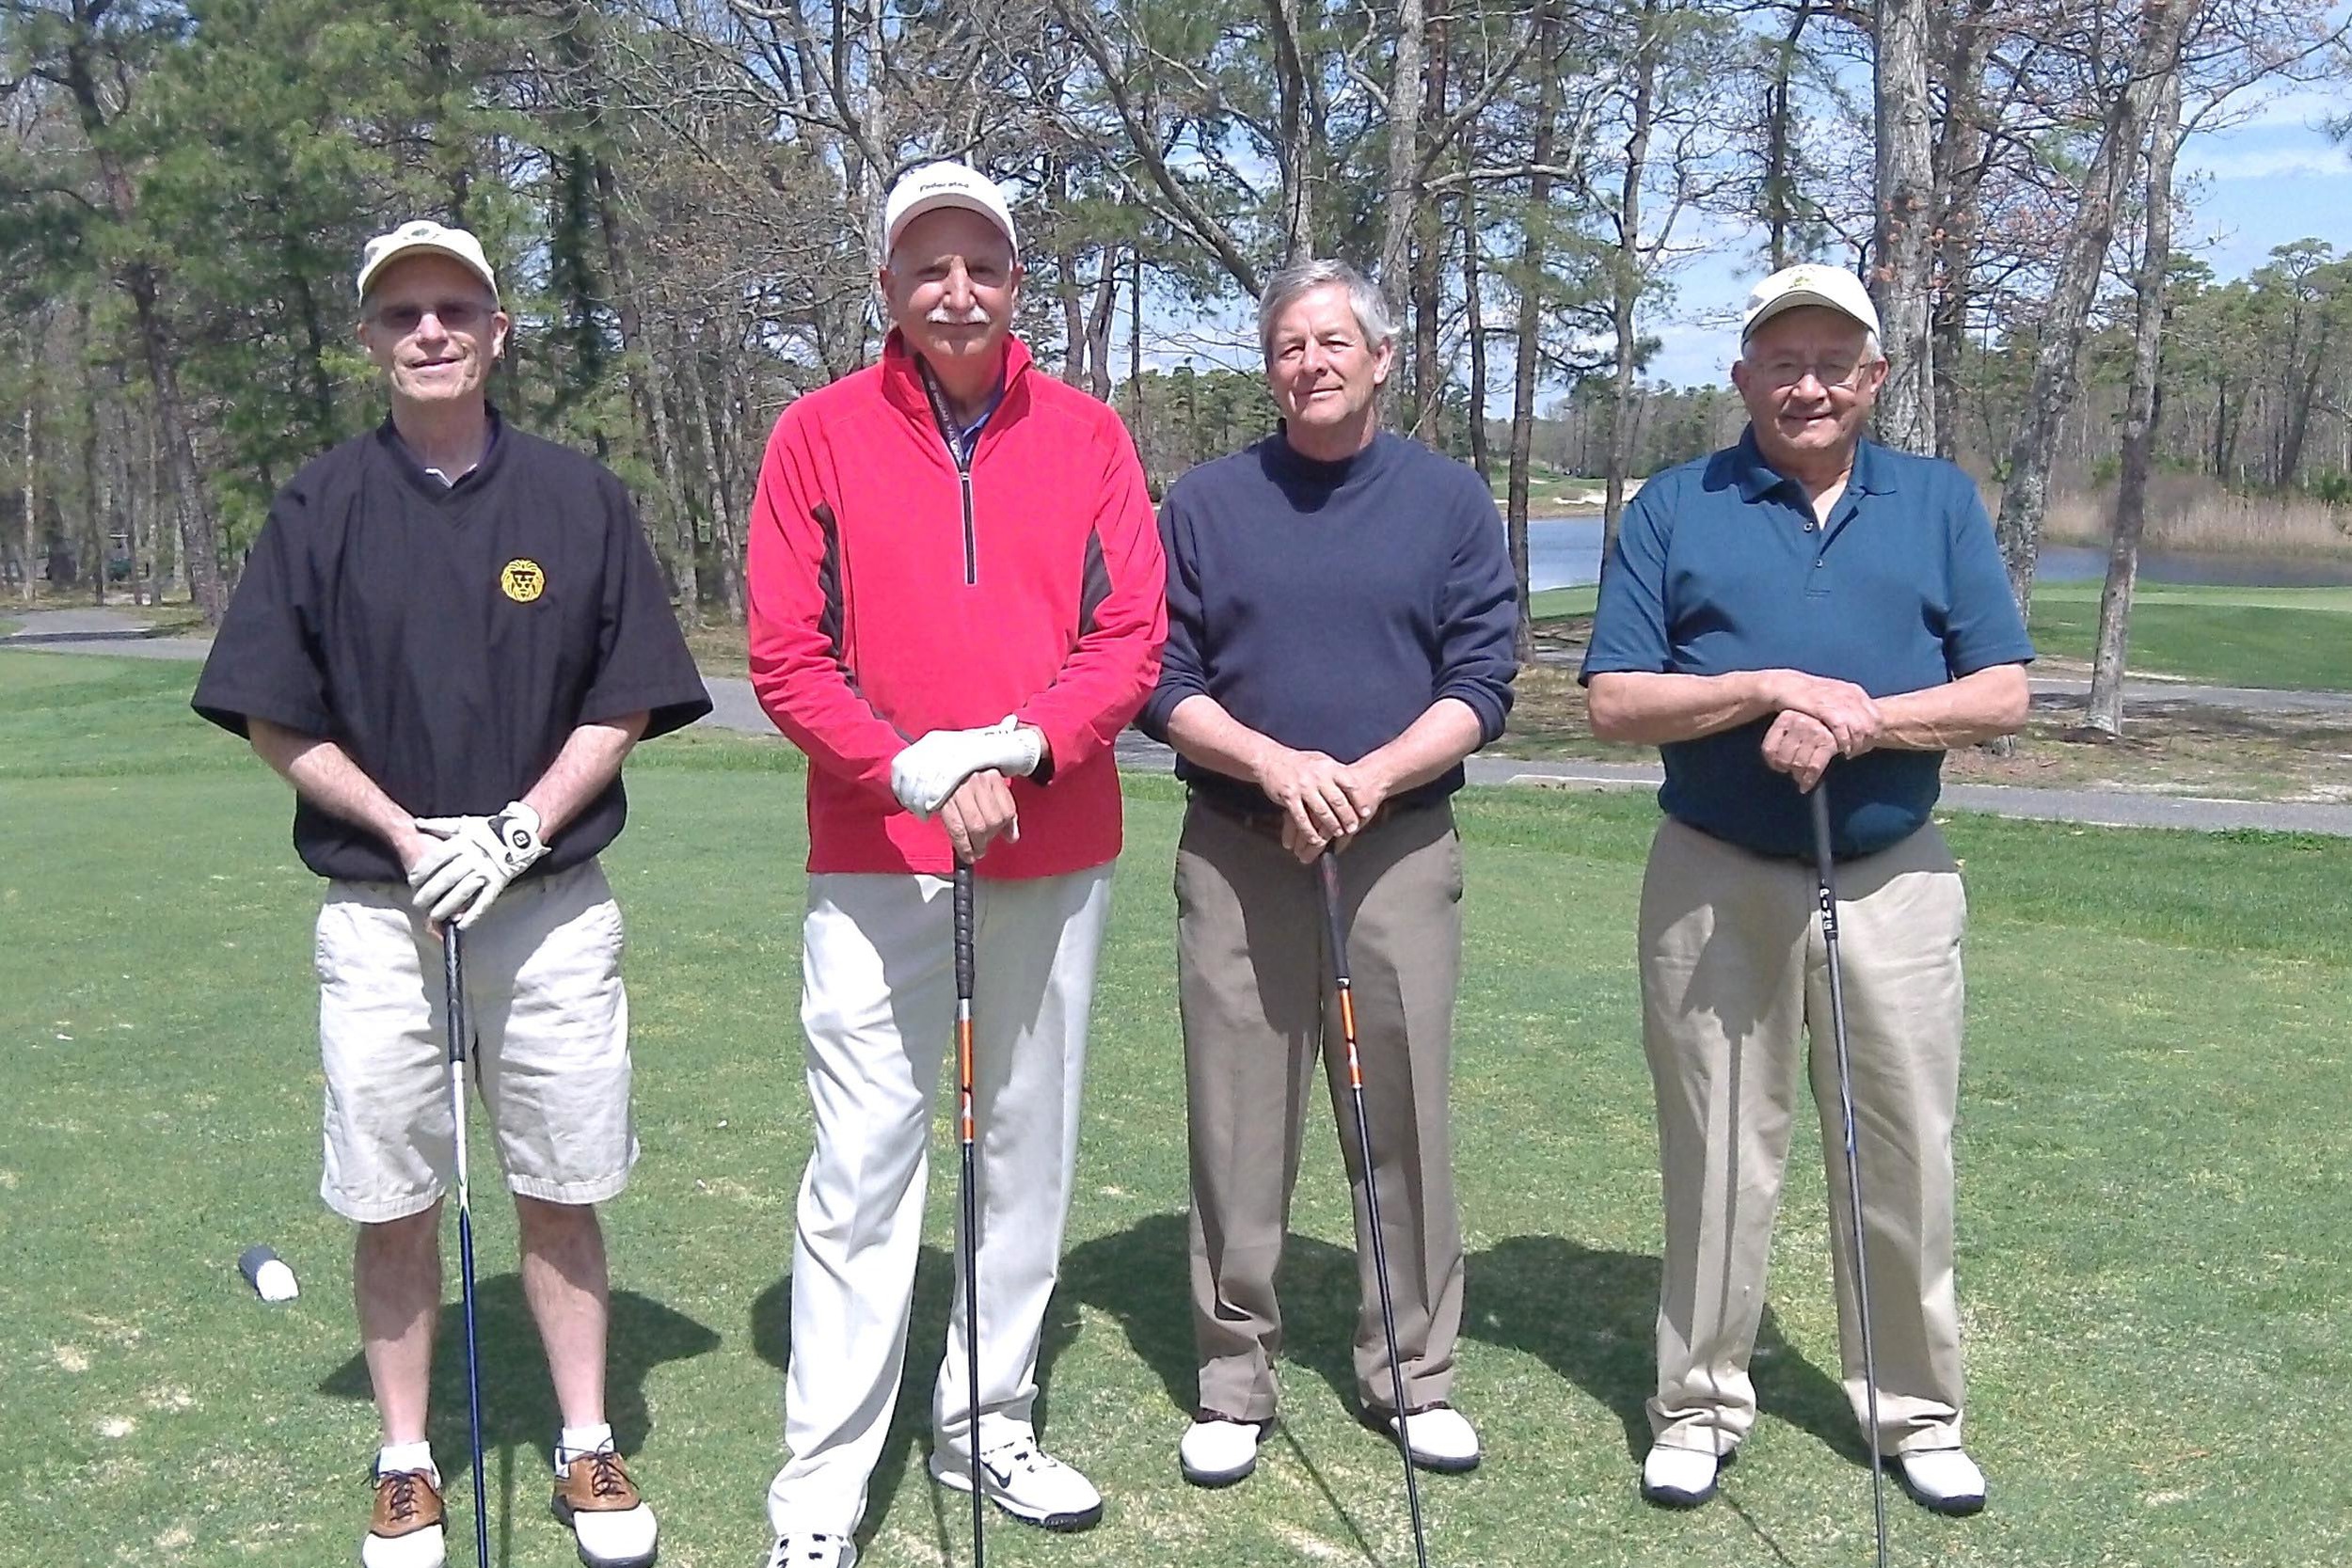  L to R: David Matthews, Anthony Bernardo Jr, Matthew Mankus, Edward Kivitz Jr., at the 2014 Theta Chi Golf Open, May 2, 2014 